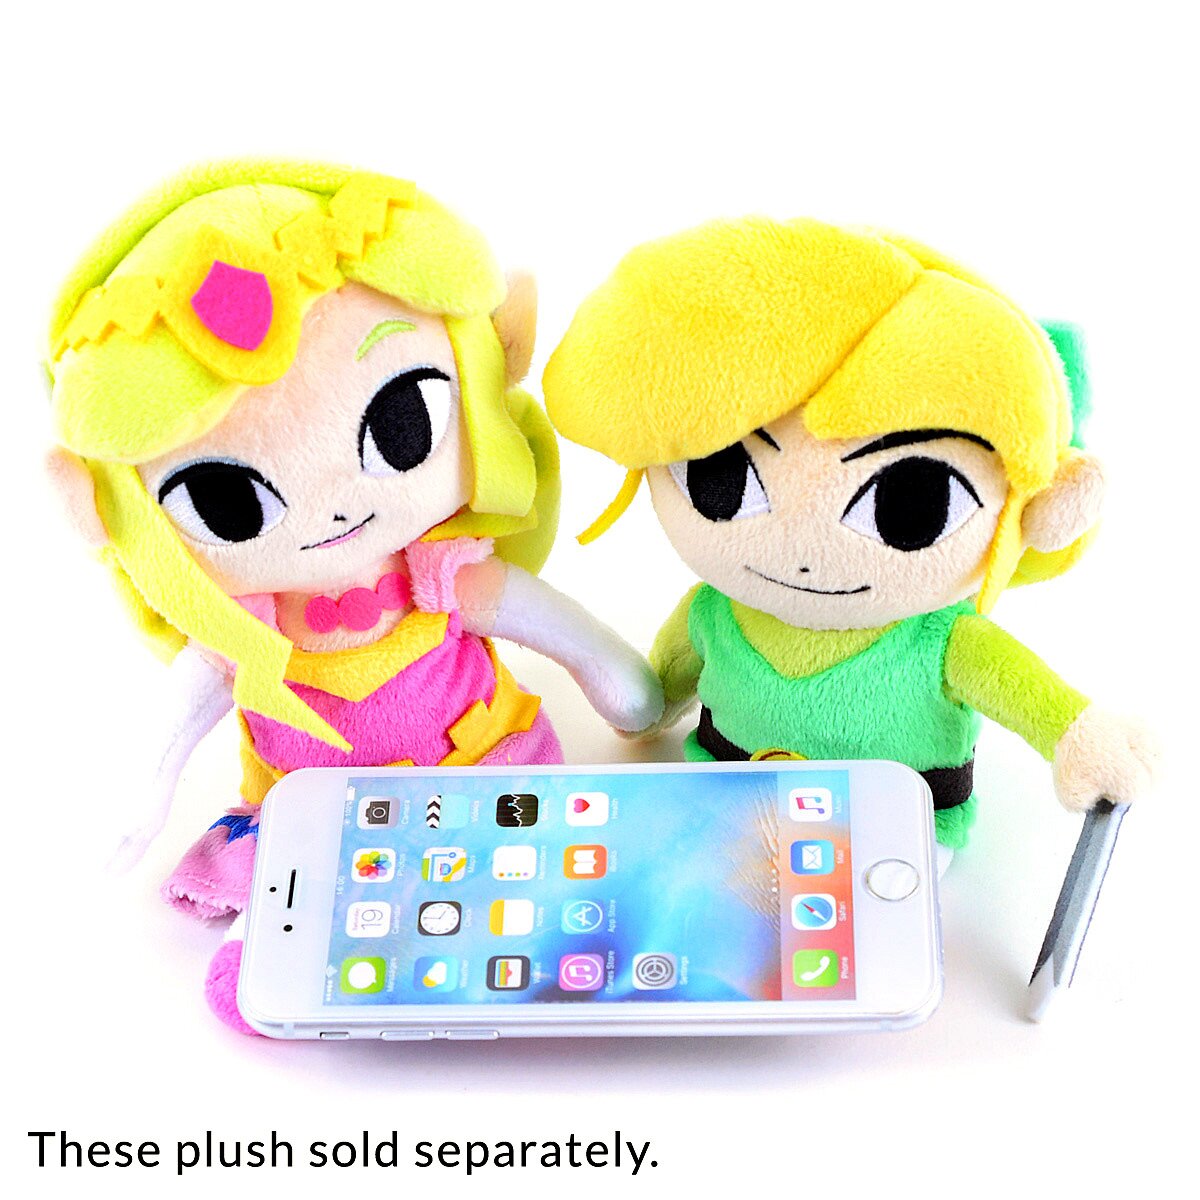 Princess Zelda plush : r/plushartists